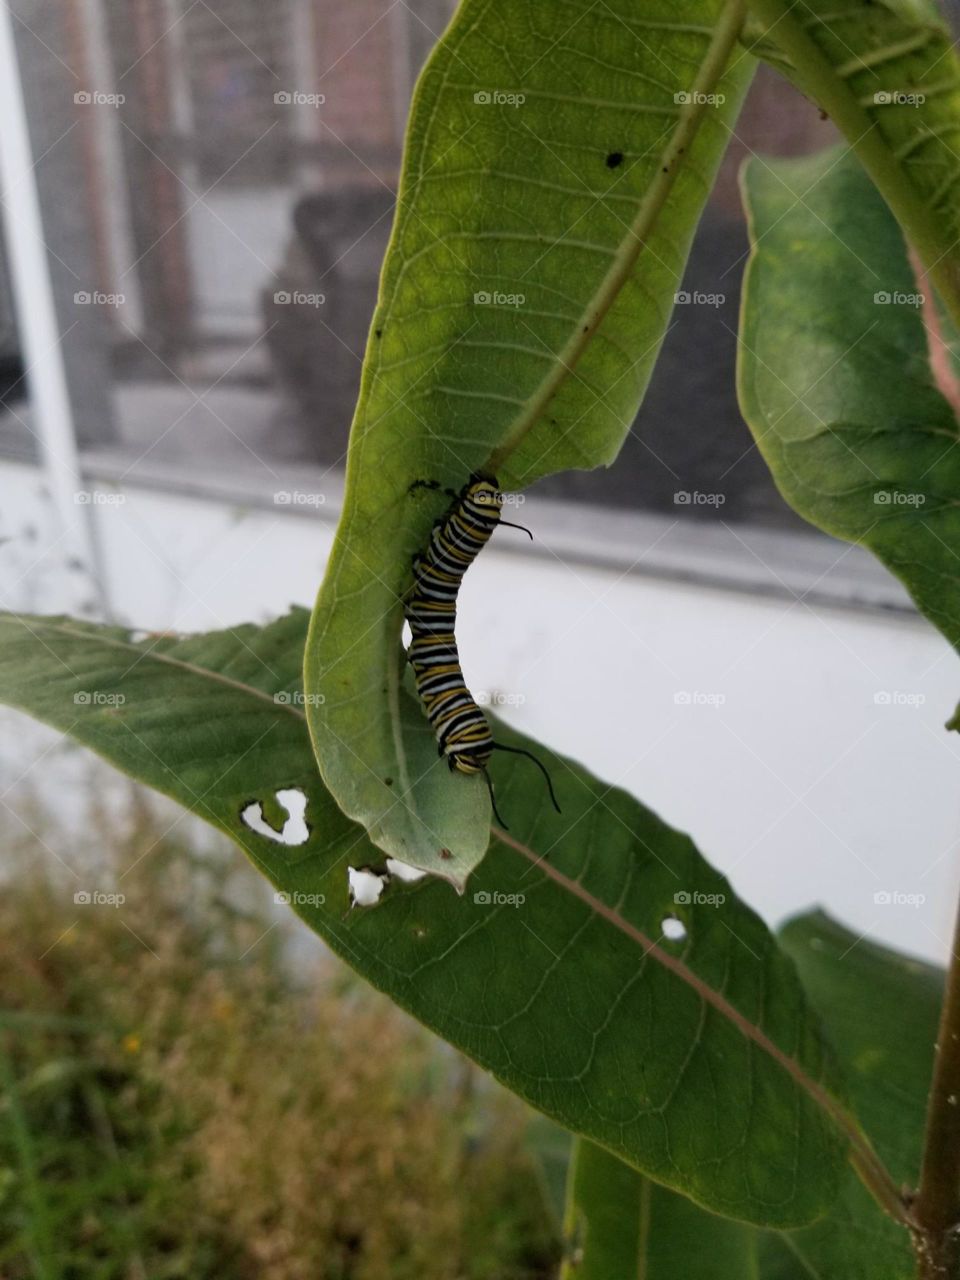 Monarch caterpillar on milk weed leaf